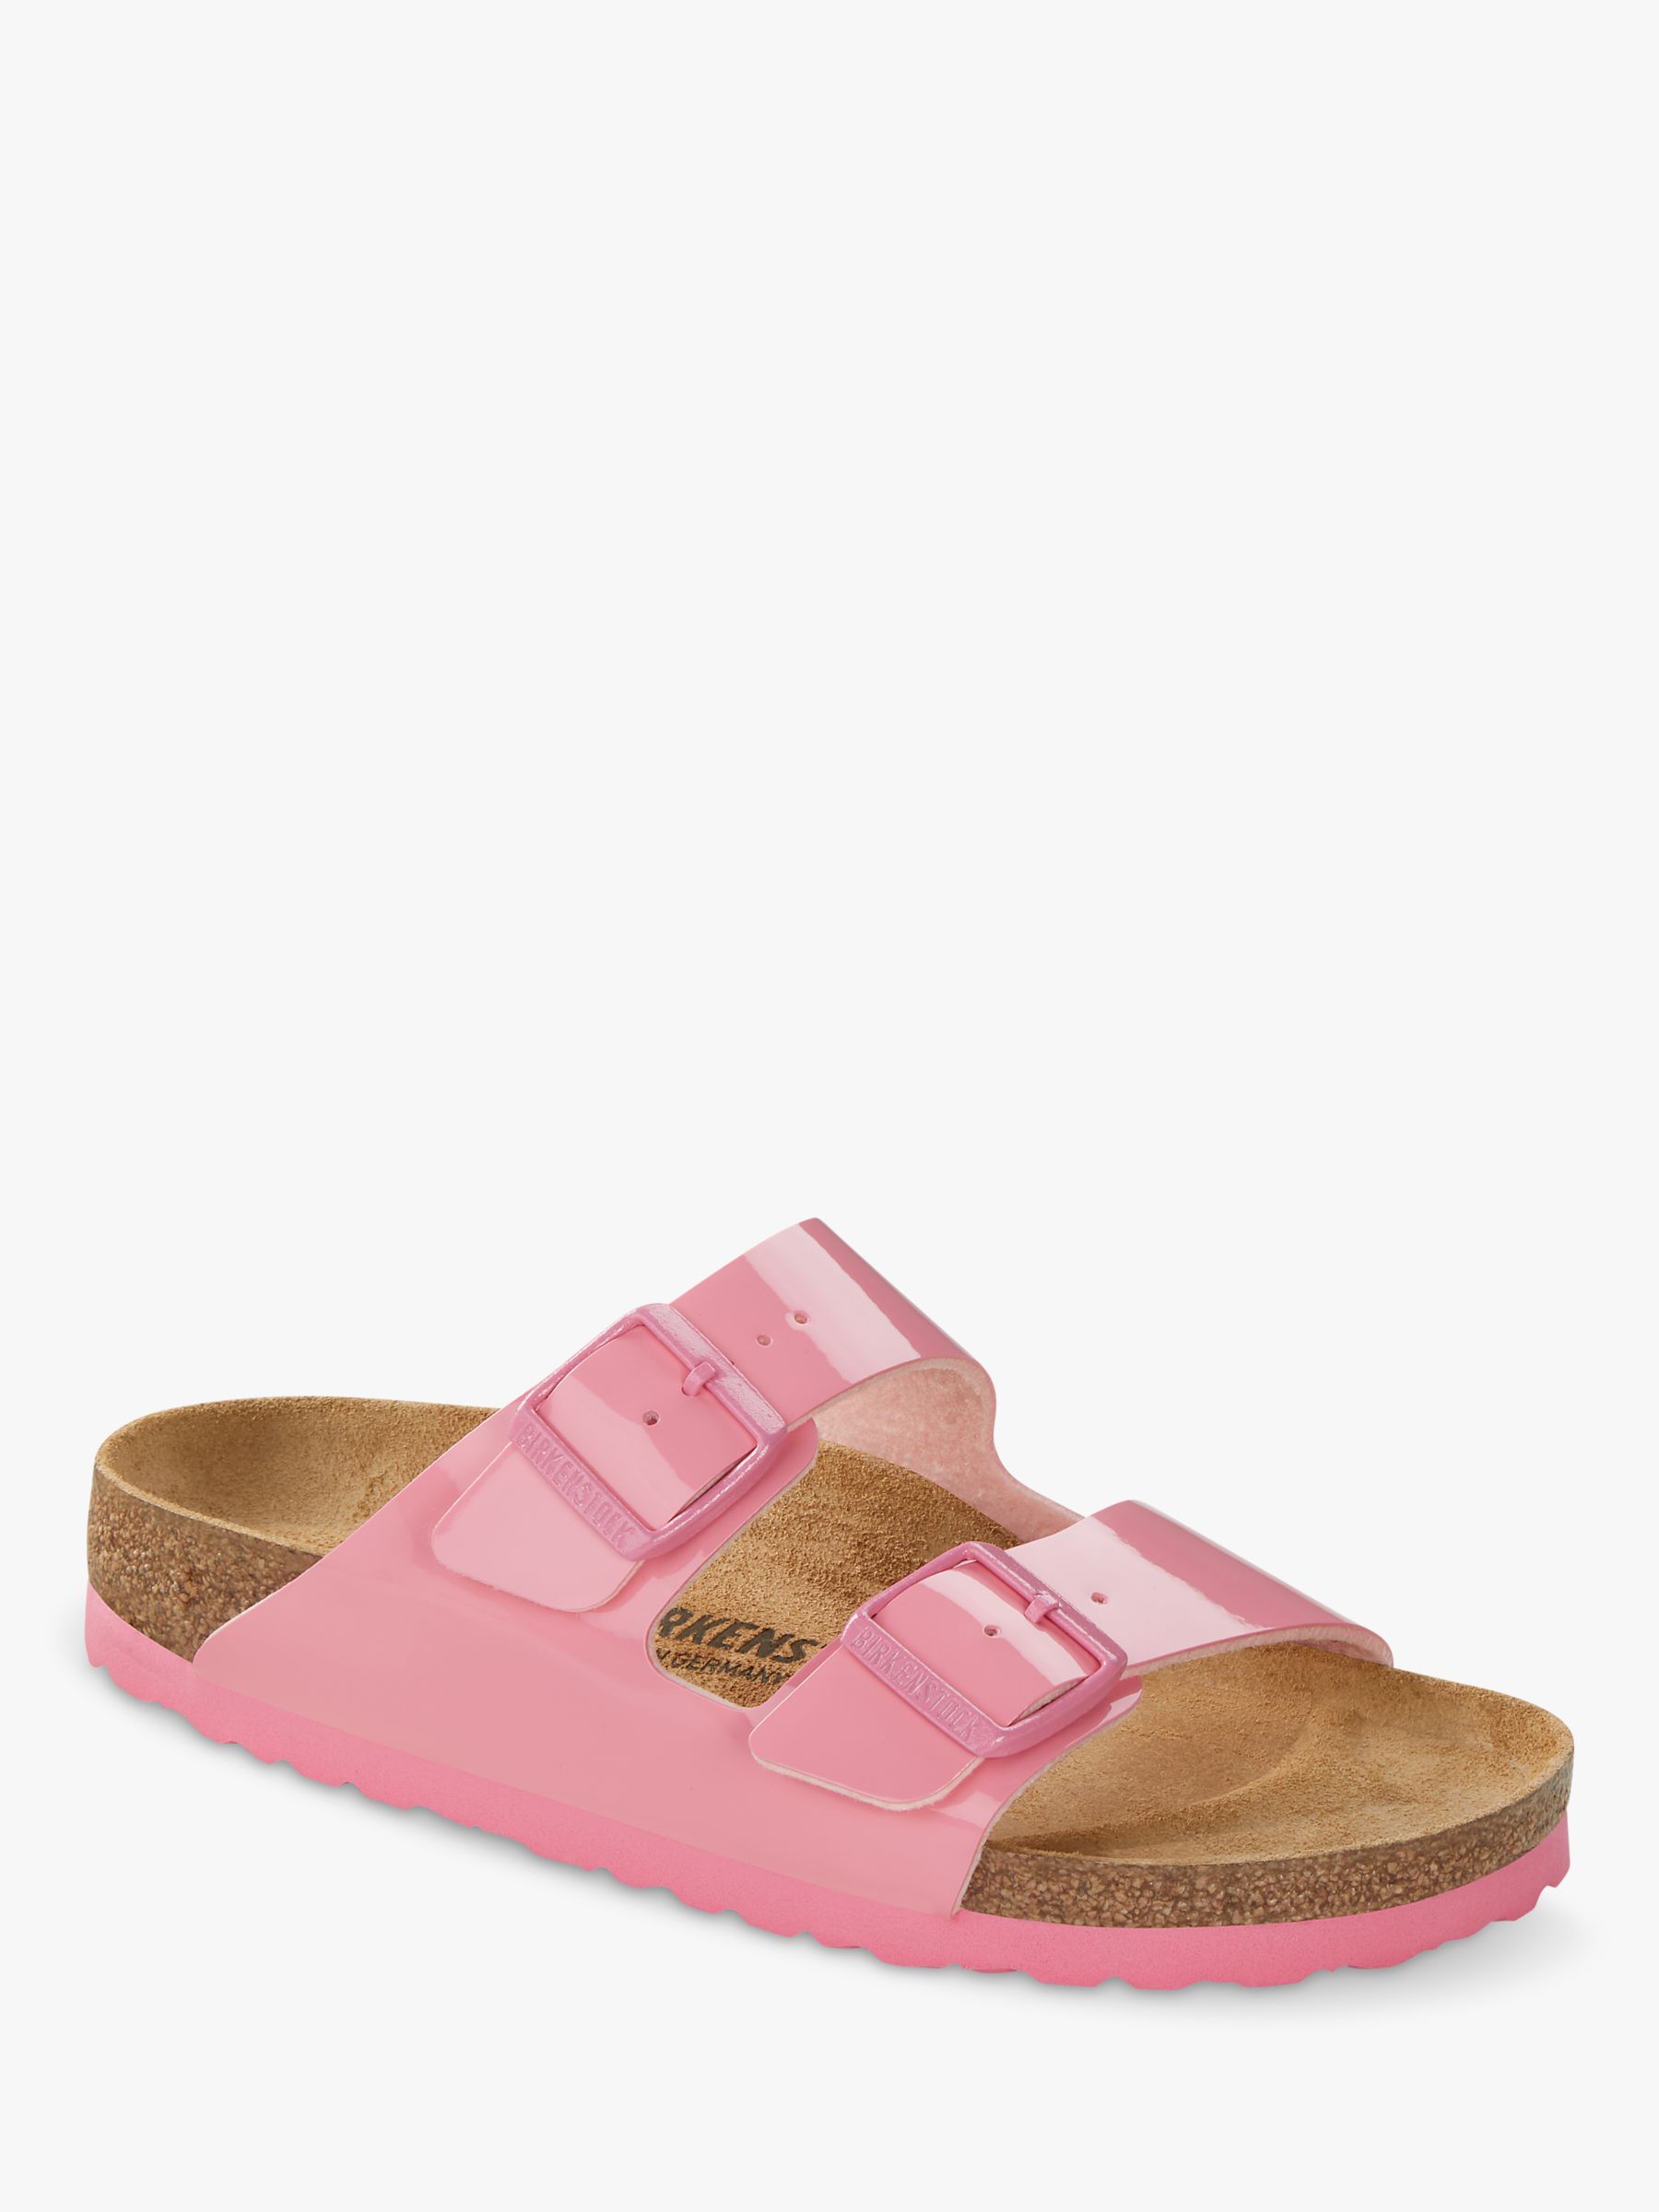 Birkenstock Arizona Patent Leather Sandals, Pink, 3